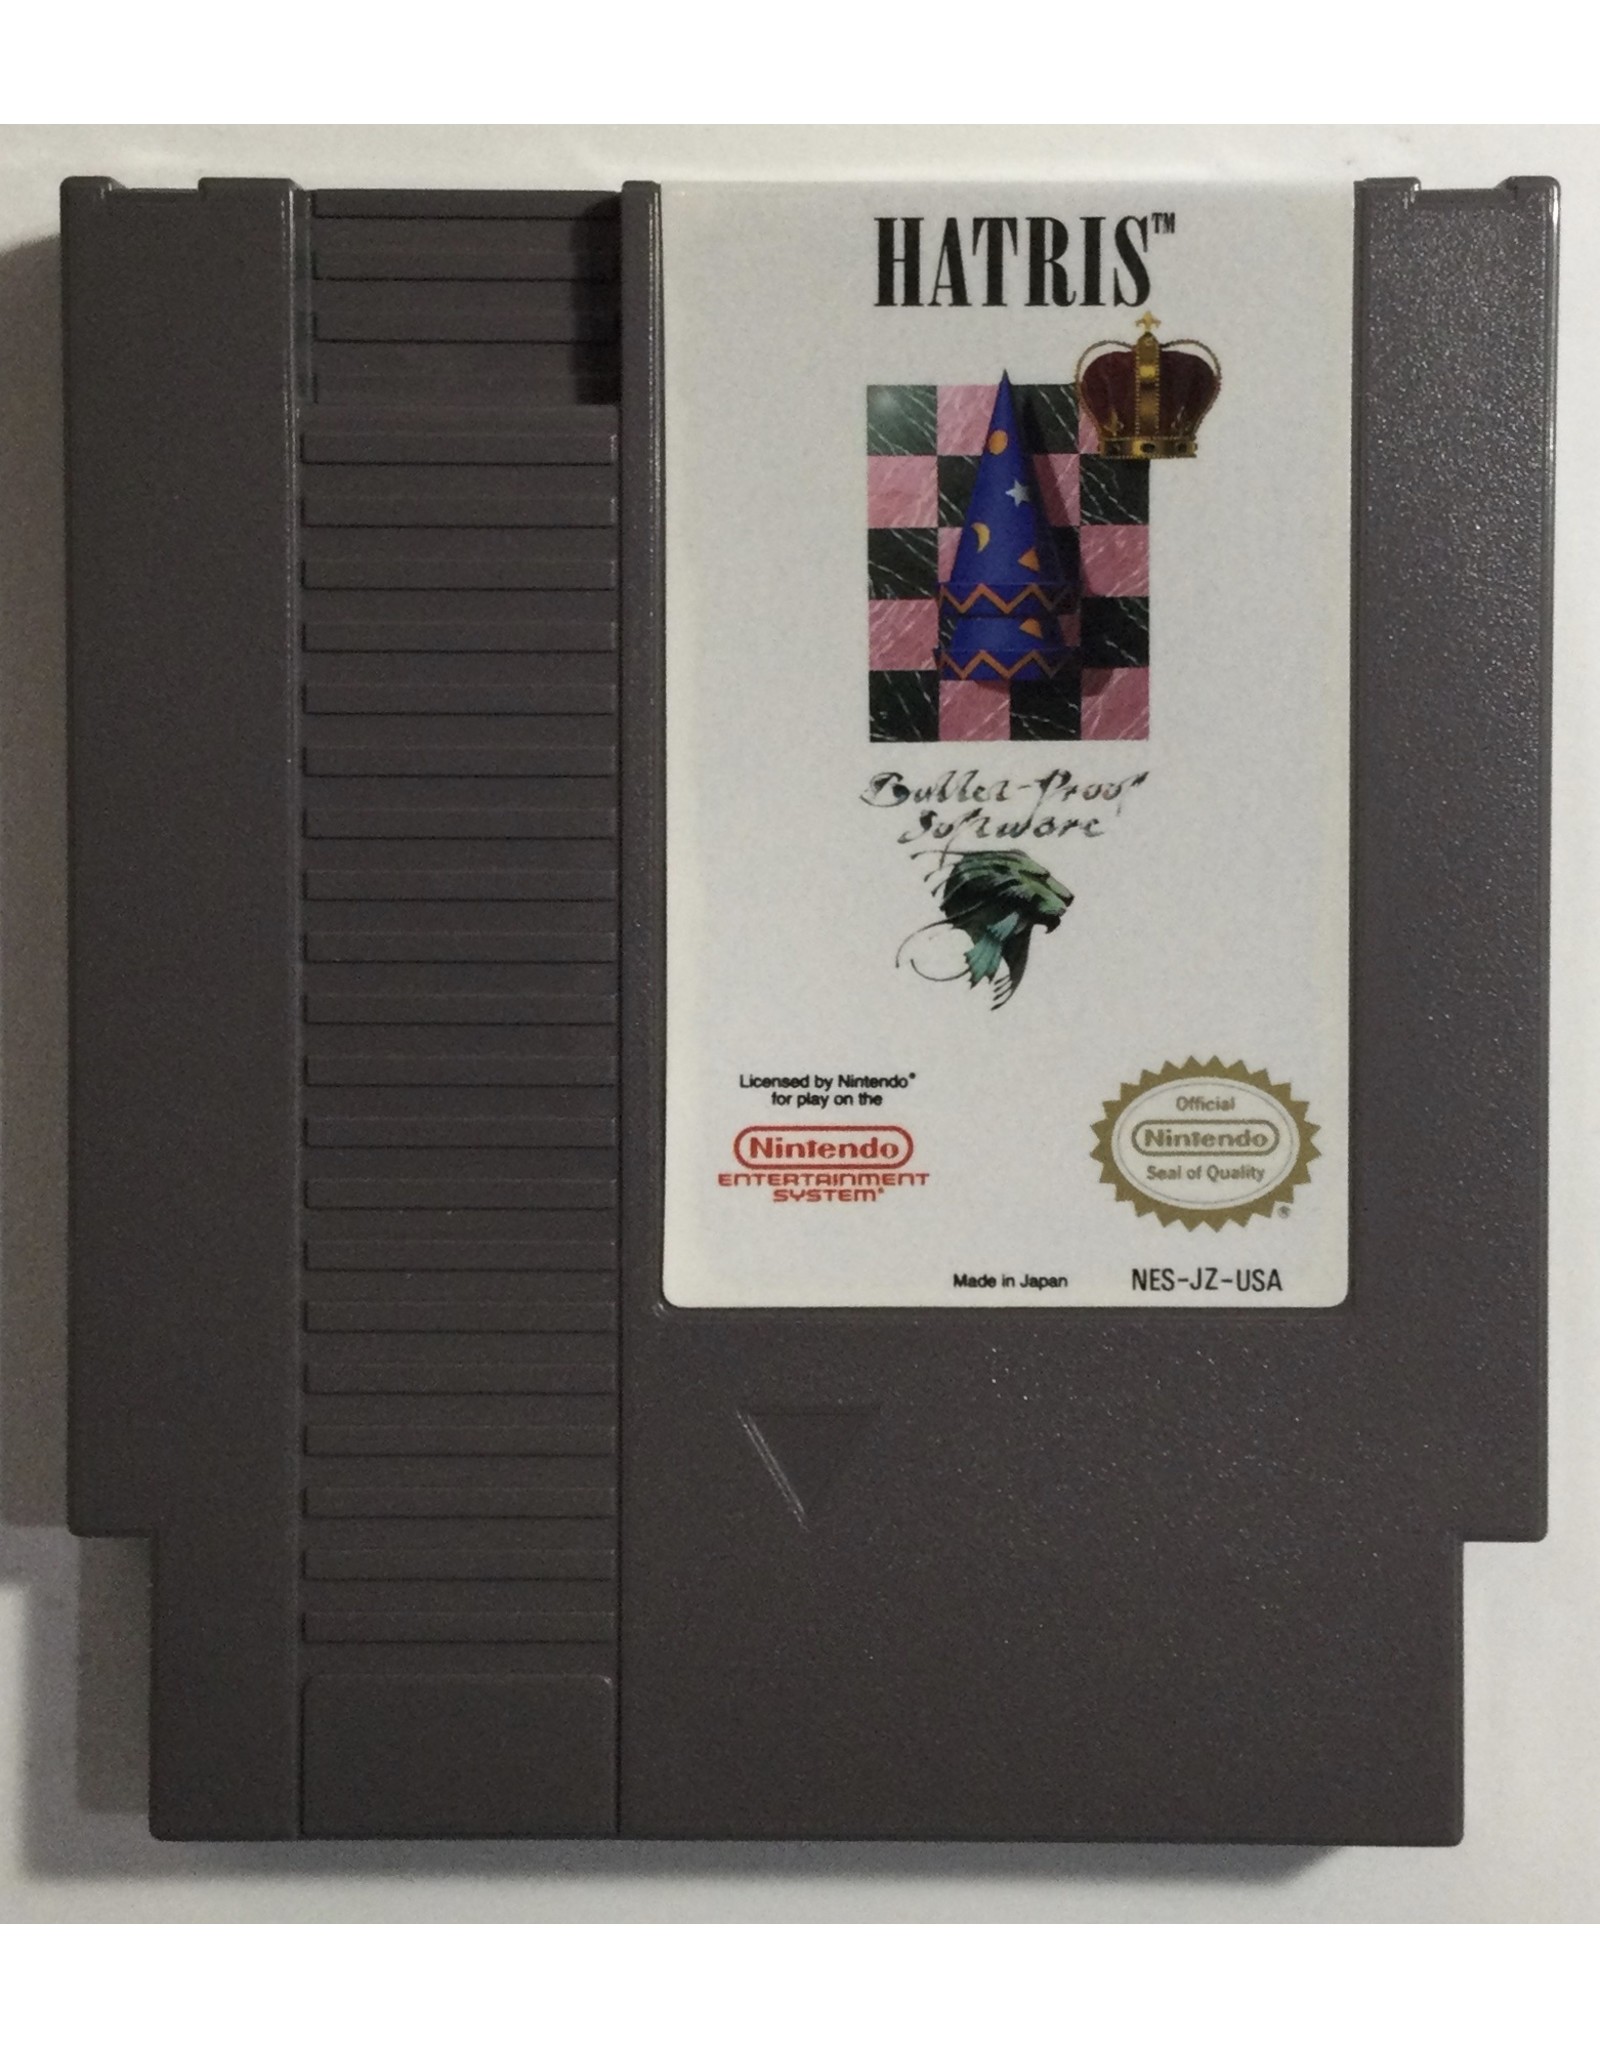 BULLET PROOF SOFTWARE Hatris for Nintendo Entertainment system (NES) - CIB